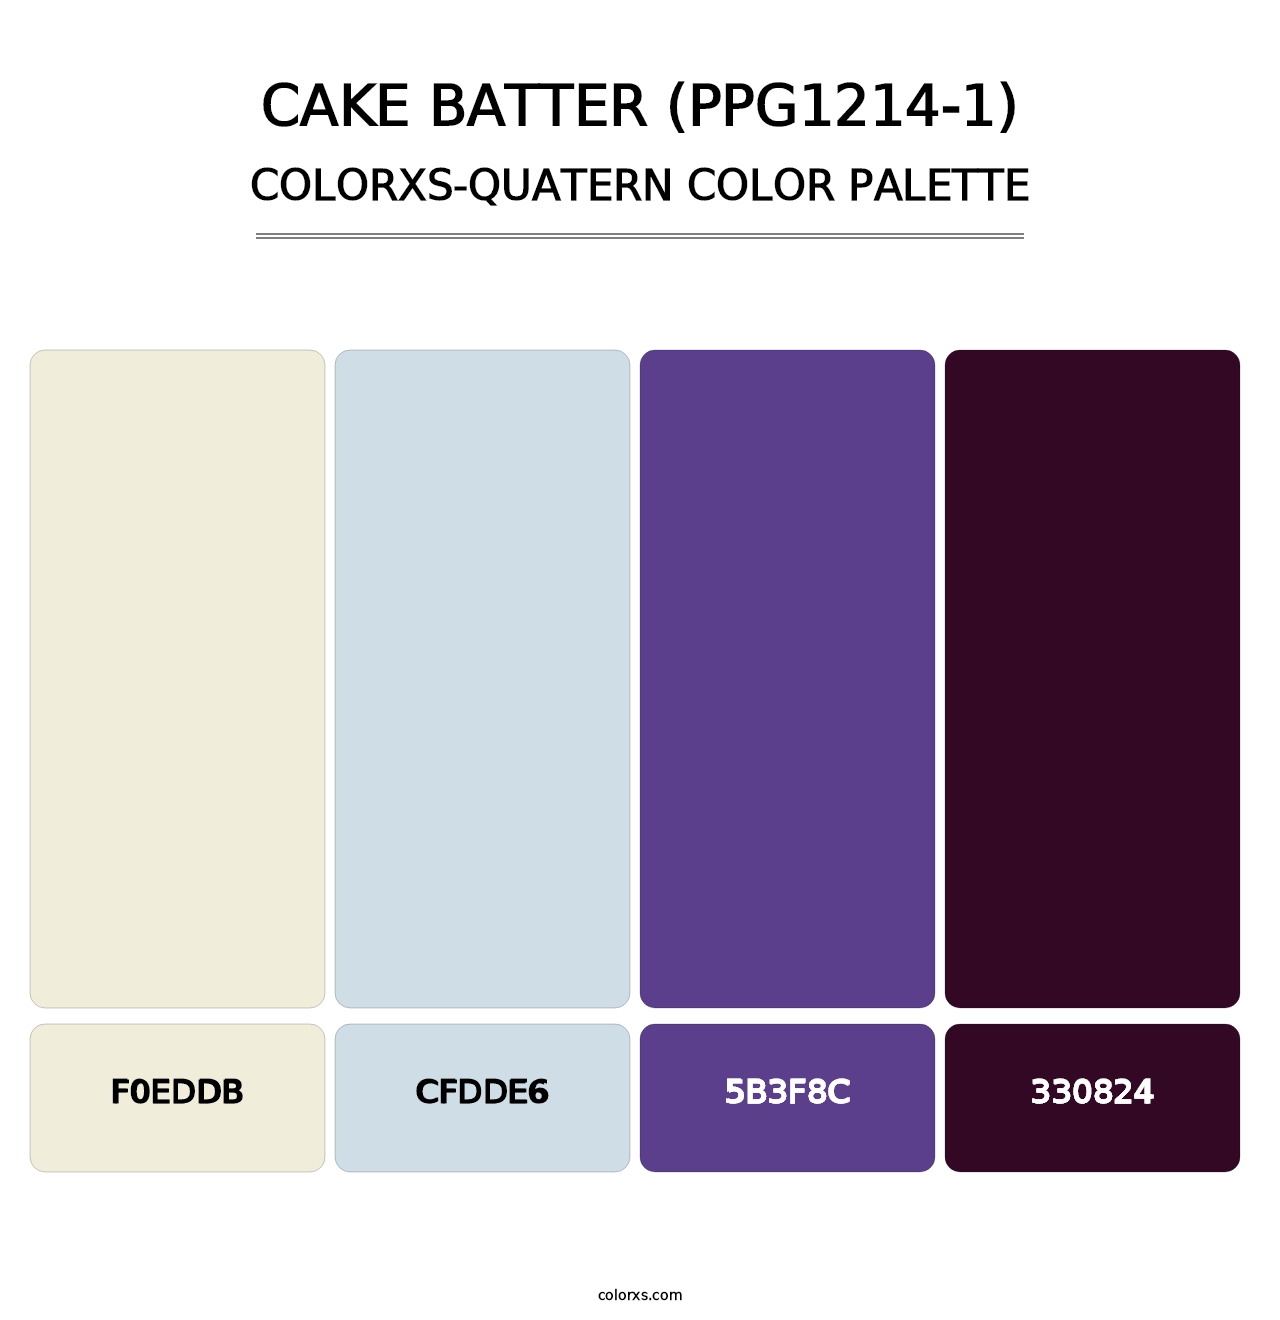 Cake Batter (PPG1214-1) - Colorxs Quatern Palette